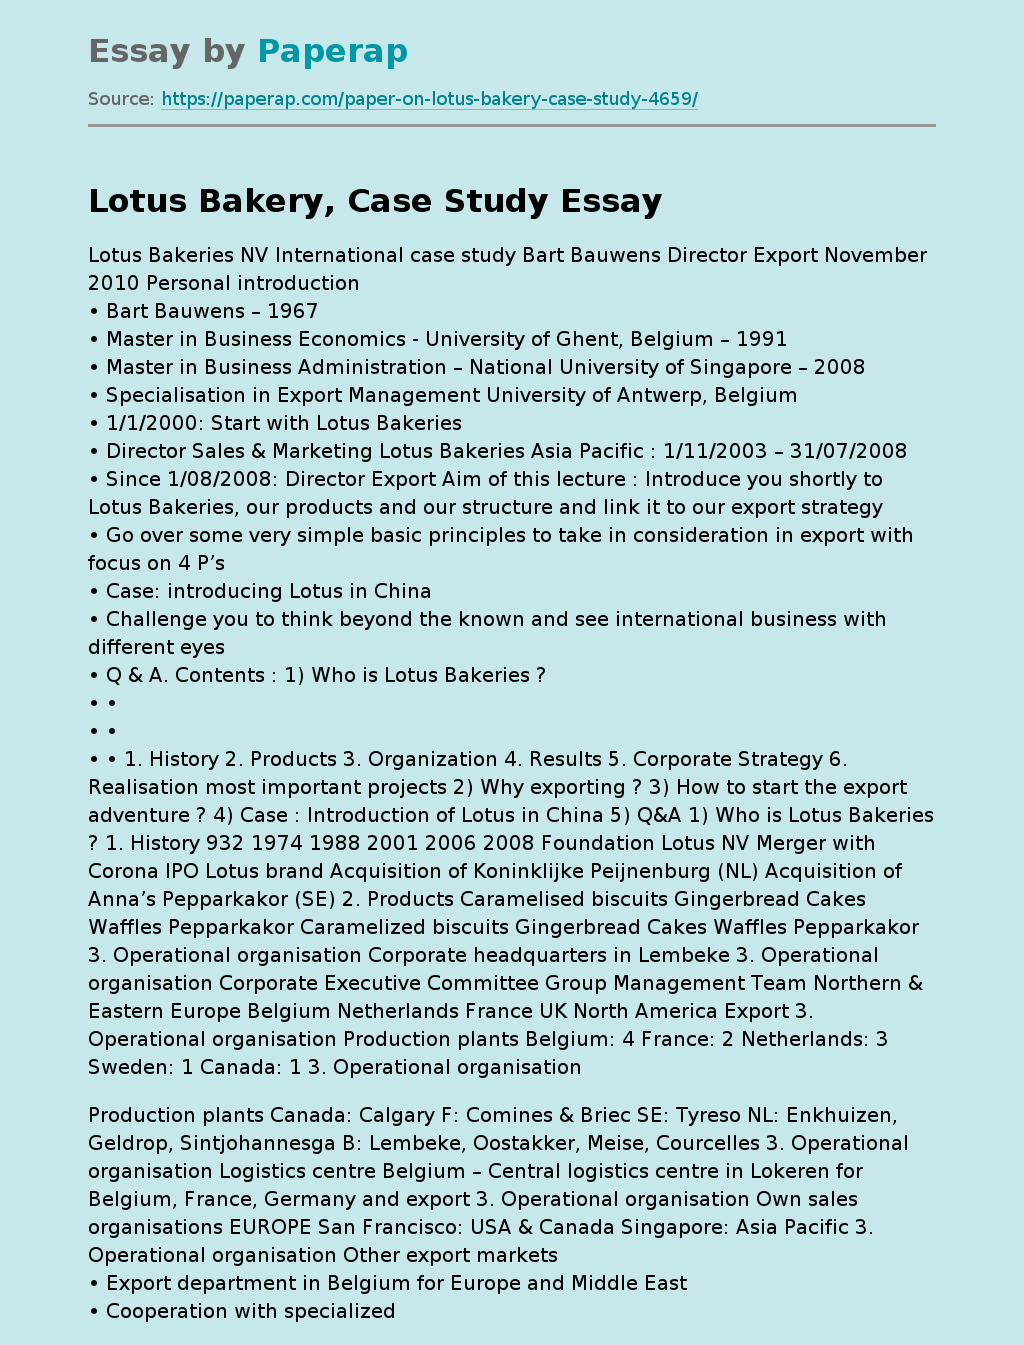 Lotus Bakery, Case Study